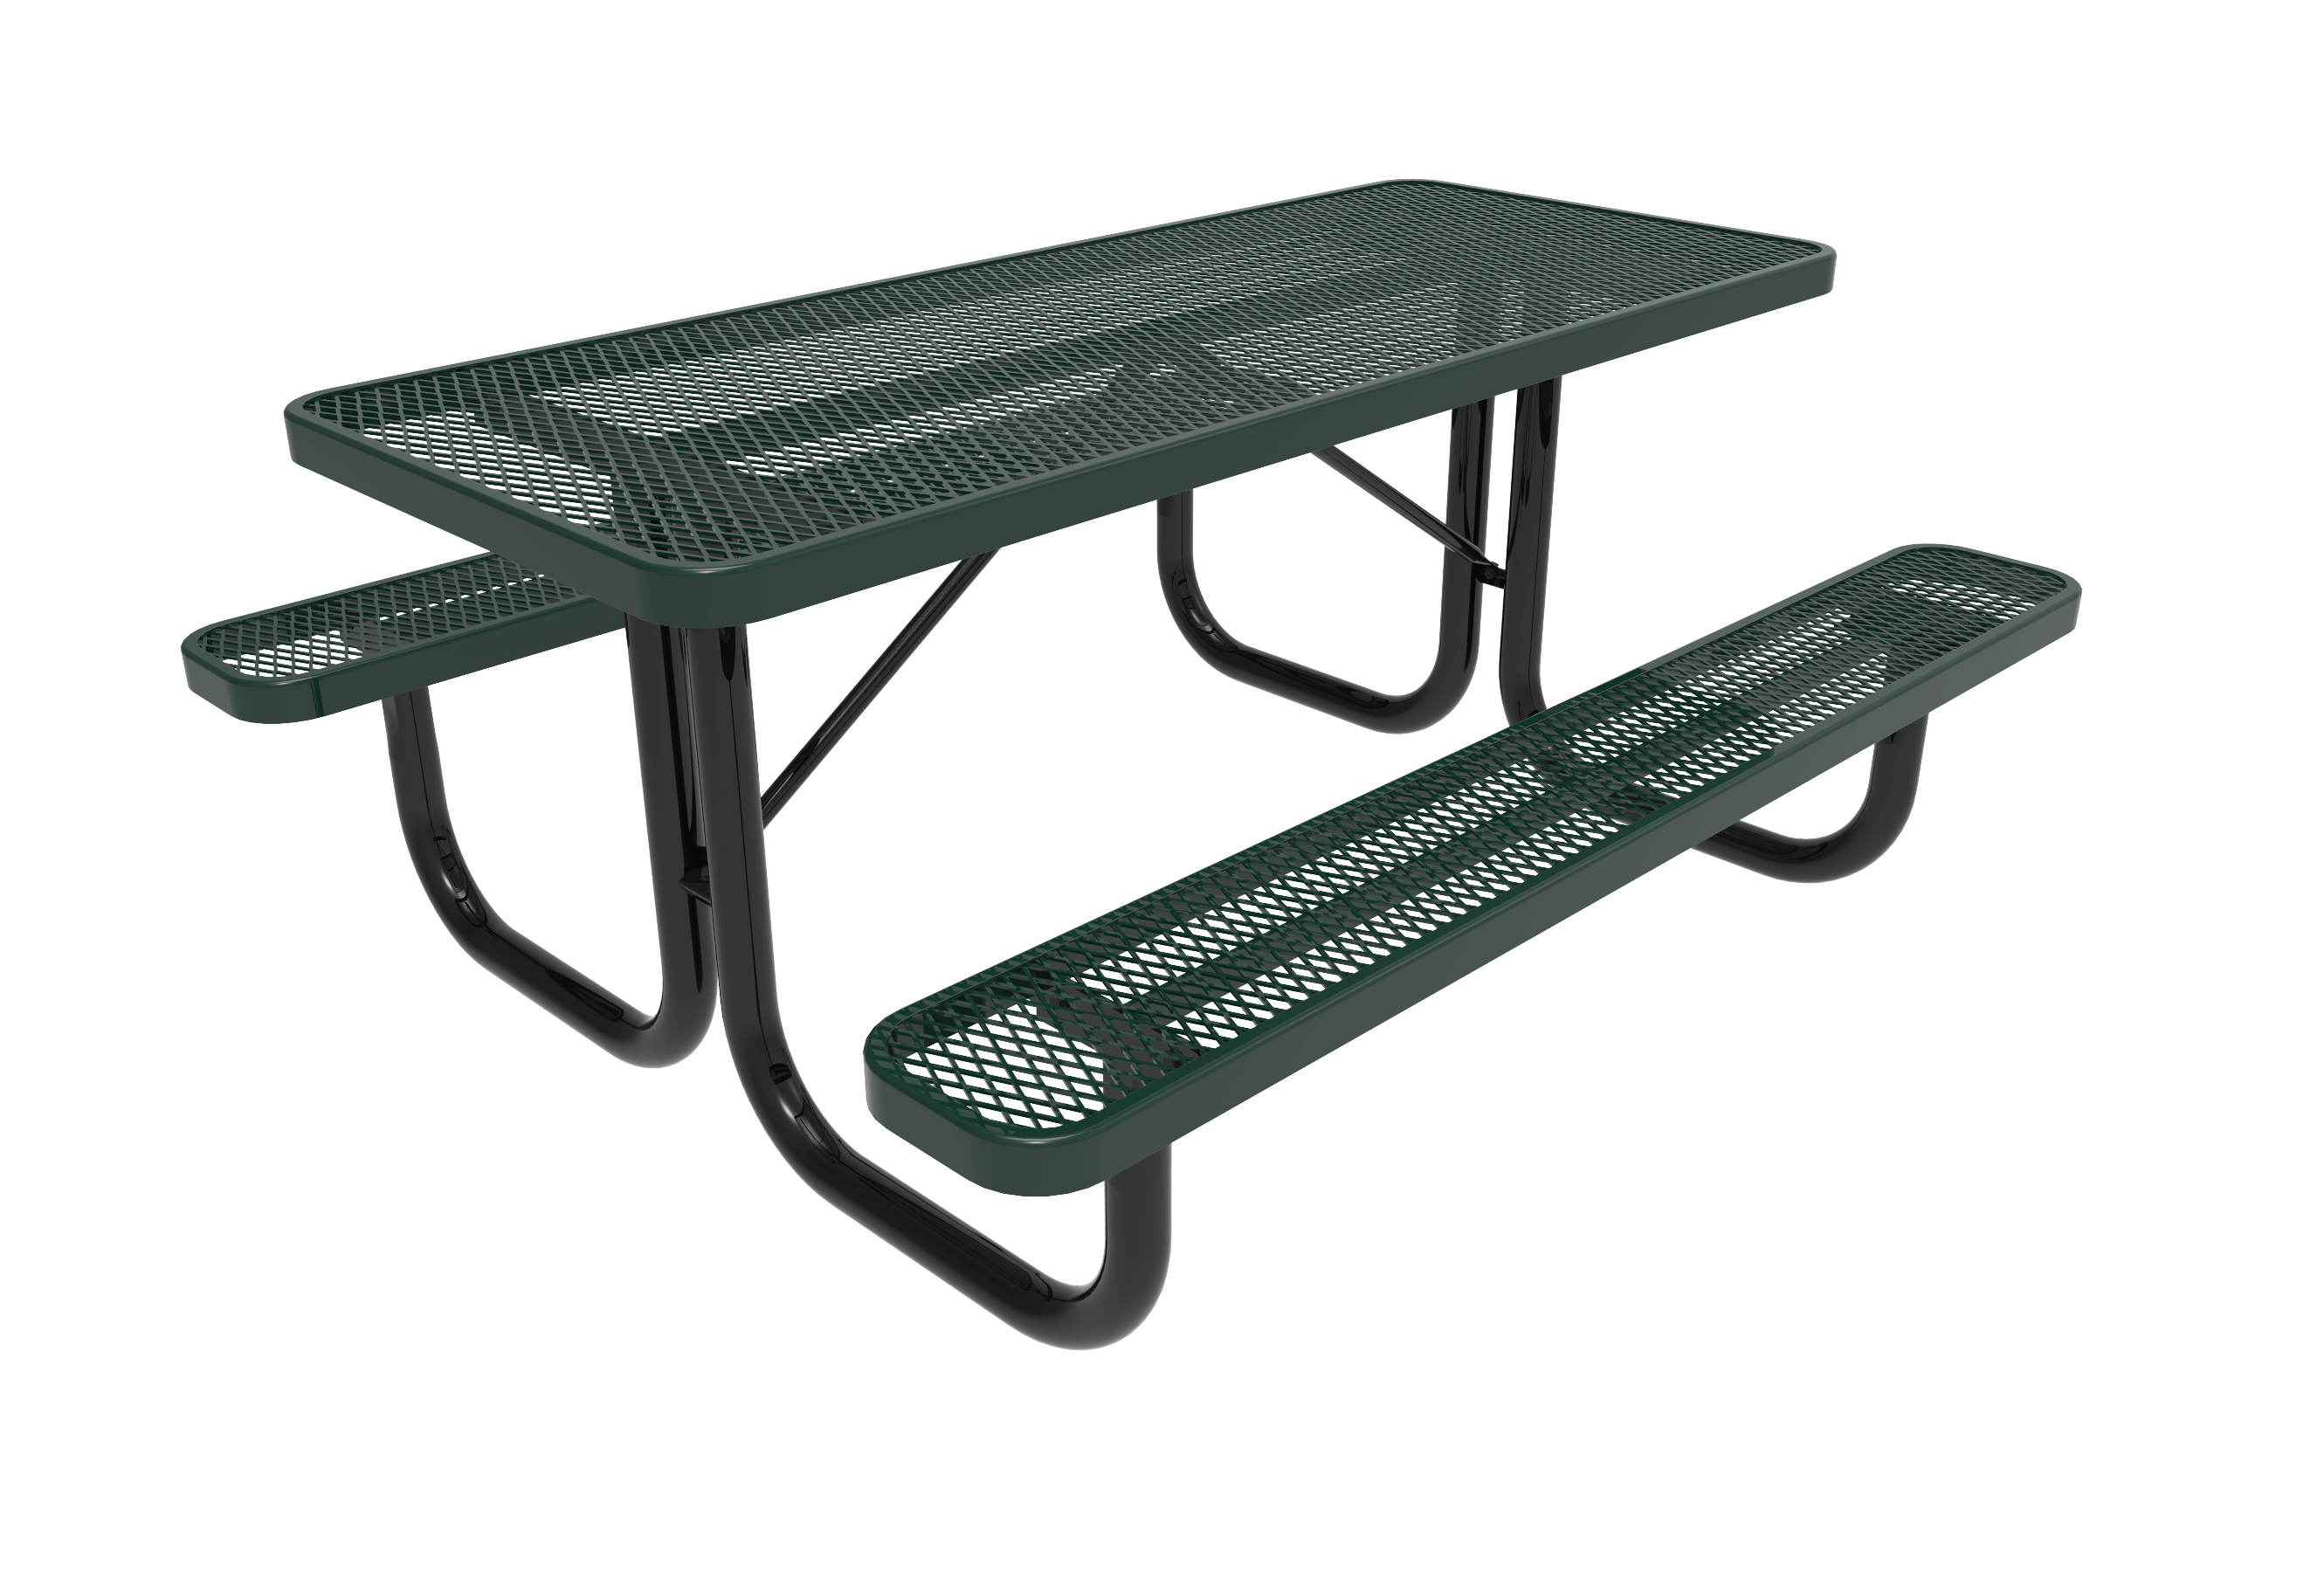 8′ Rectangular Picnic Table-Mesh
TRT08-C-01-000
Industry Standard Finish
$909.00
TRT08-A-01-000
Advantage Premium Finish
$1169.00
